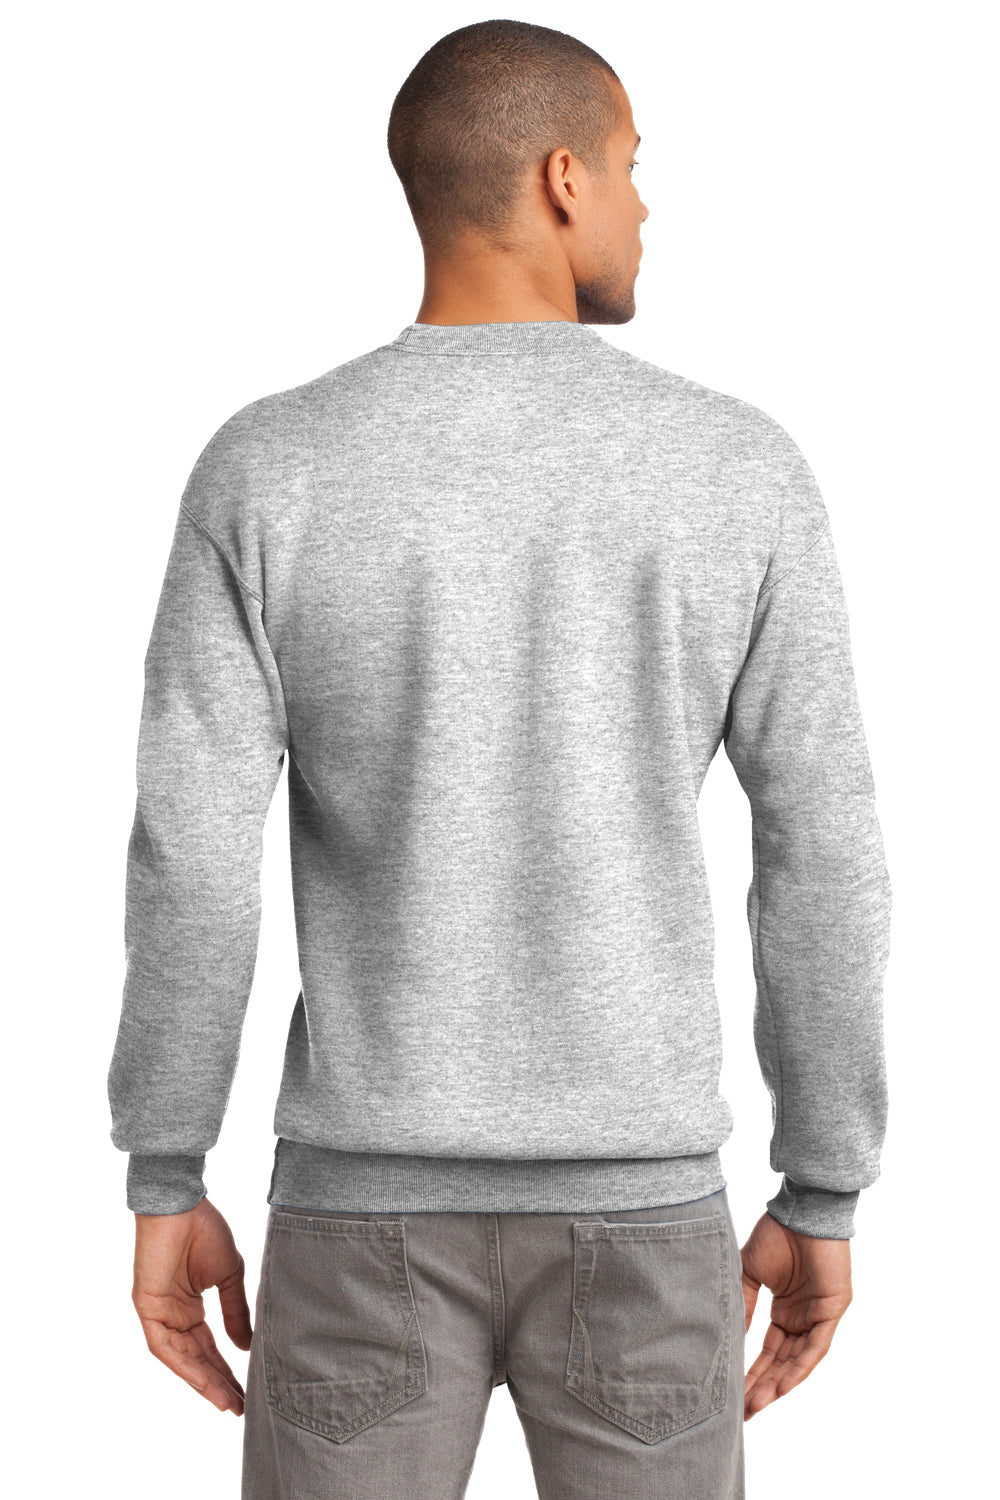 Port & Company PC90 Mens Essential Fleece Crewneck Sweatshirt Ash Grey Back